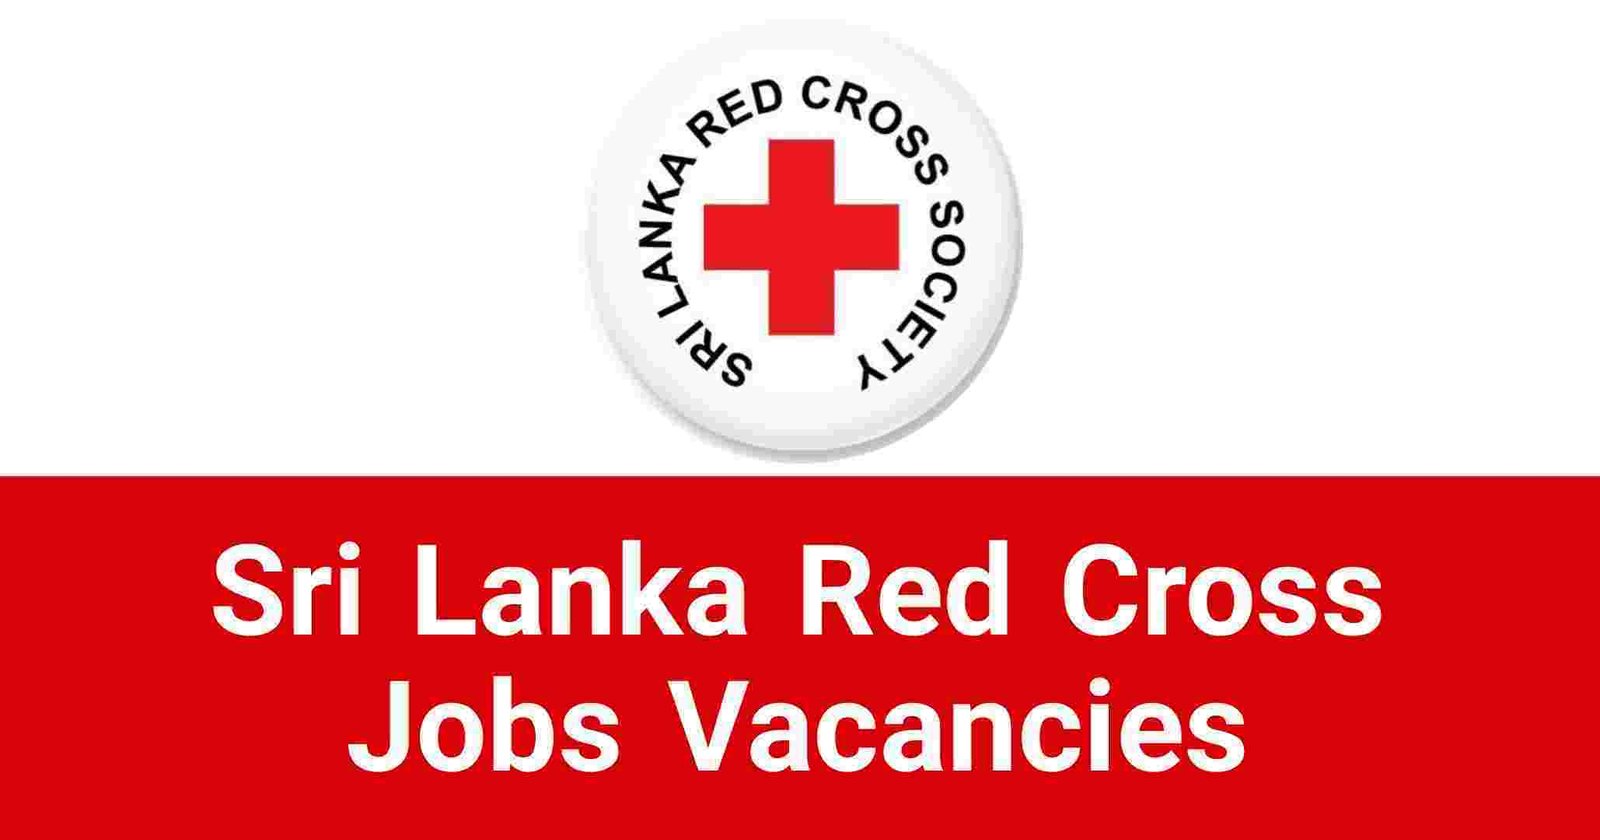 Sri Lanka Red Cross Jobs Vacancies